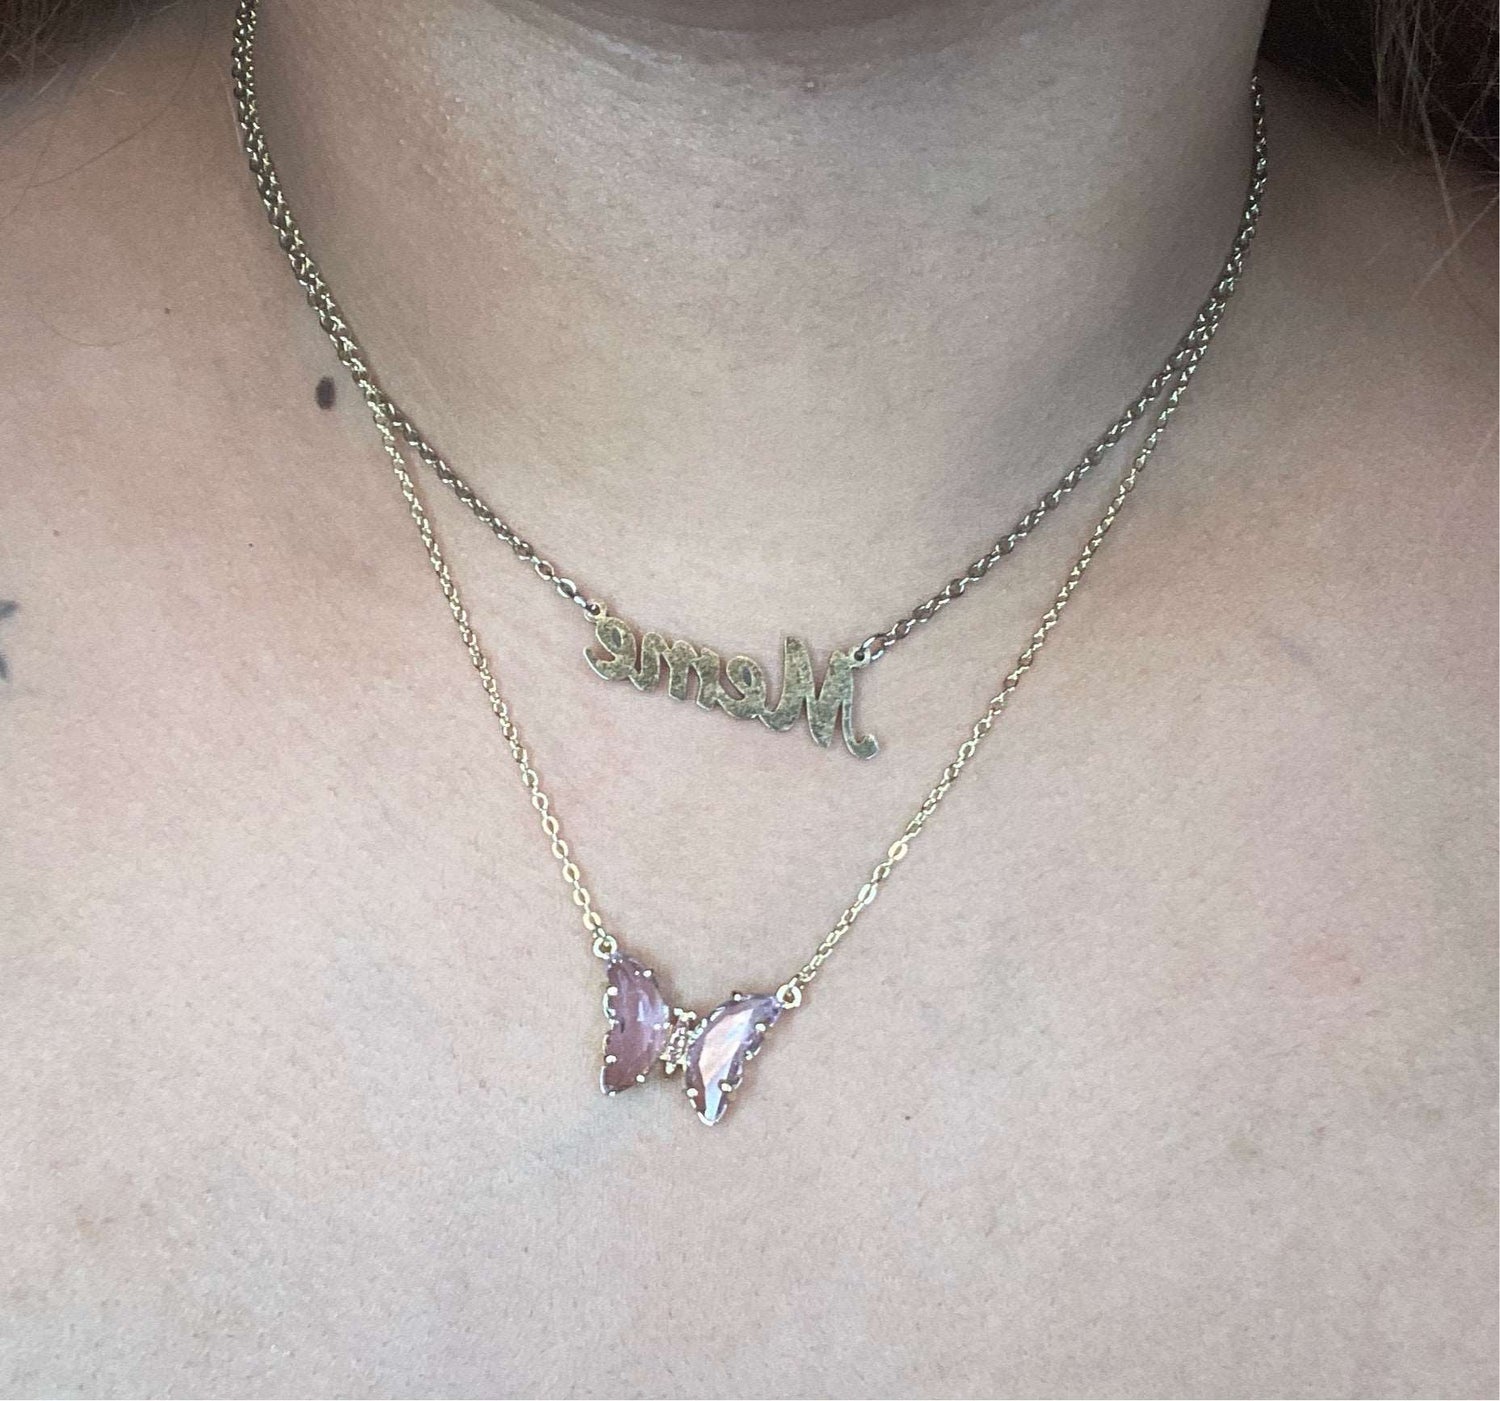 Butterfly necklace - Slayed by Meme